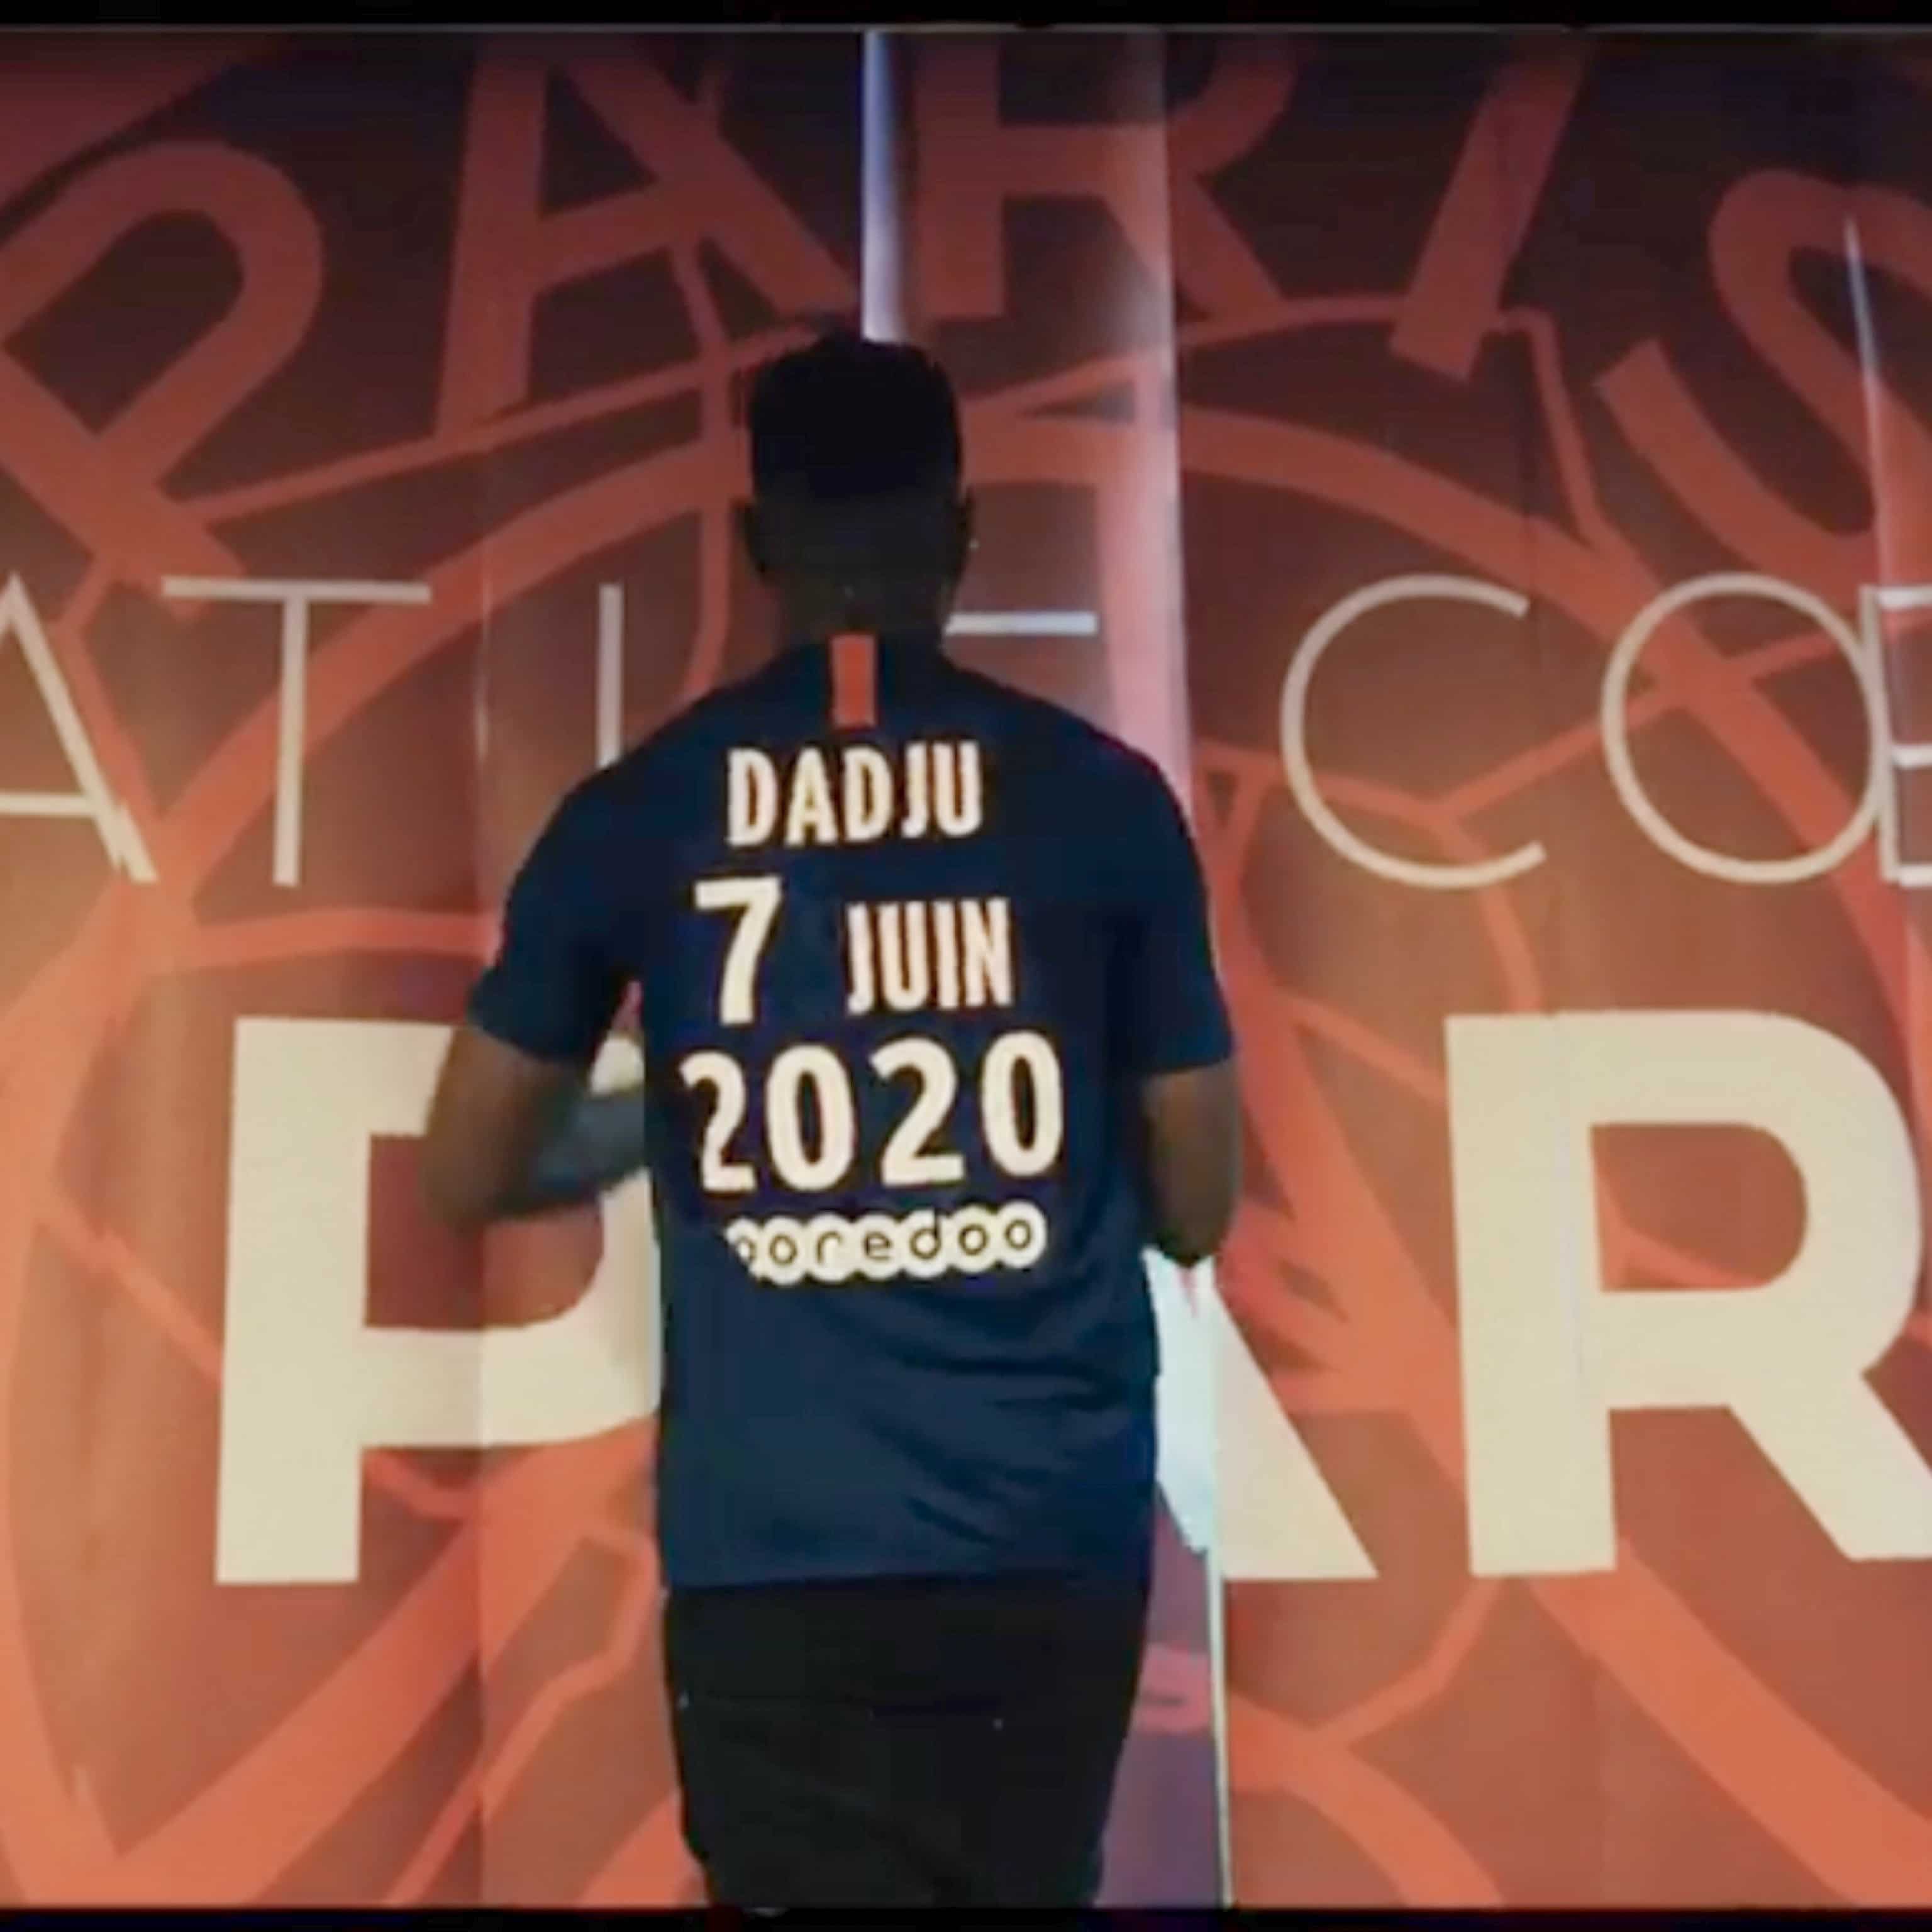 DADJU S'OFFRE UN STADE - Billet Concert Dadju Parc Des Princes 2022